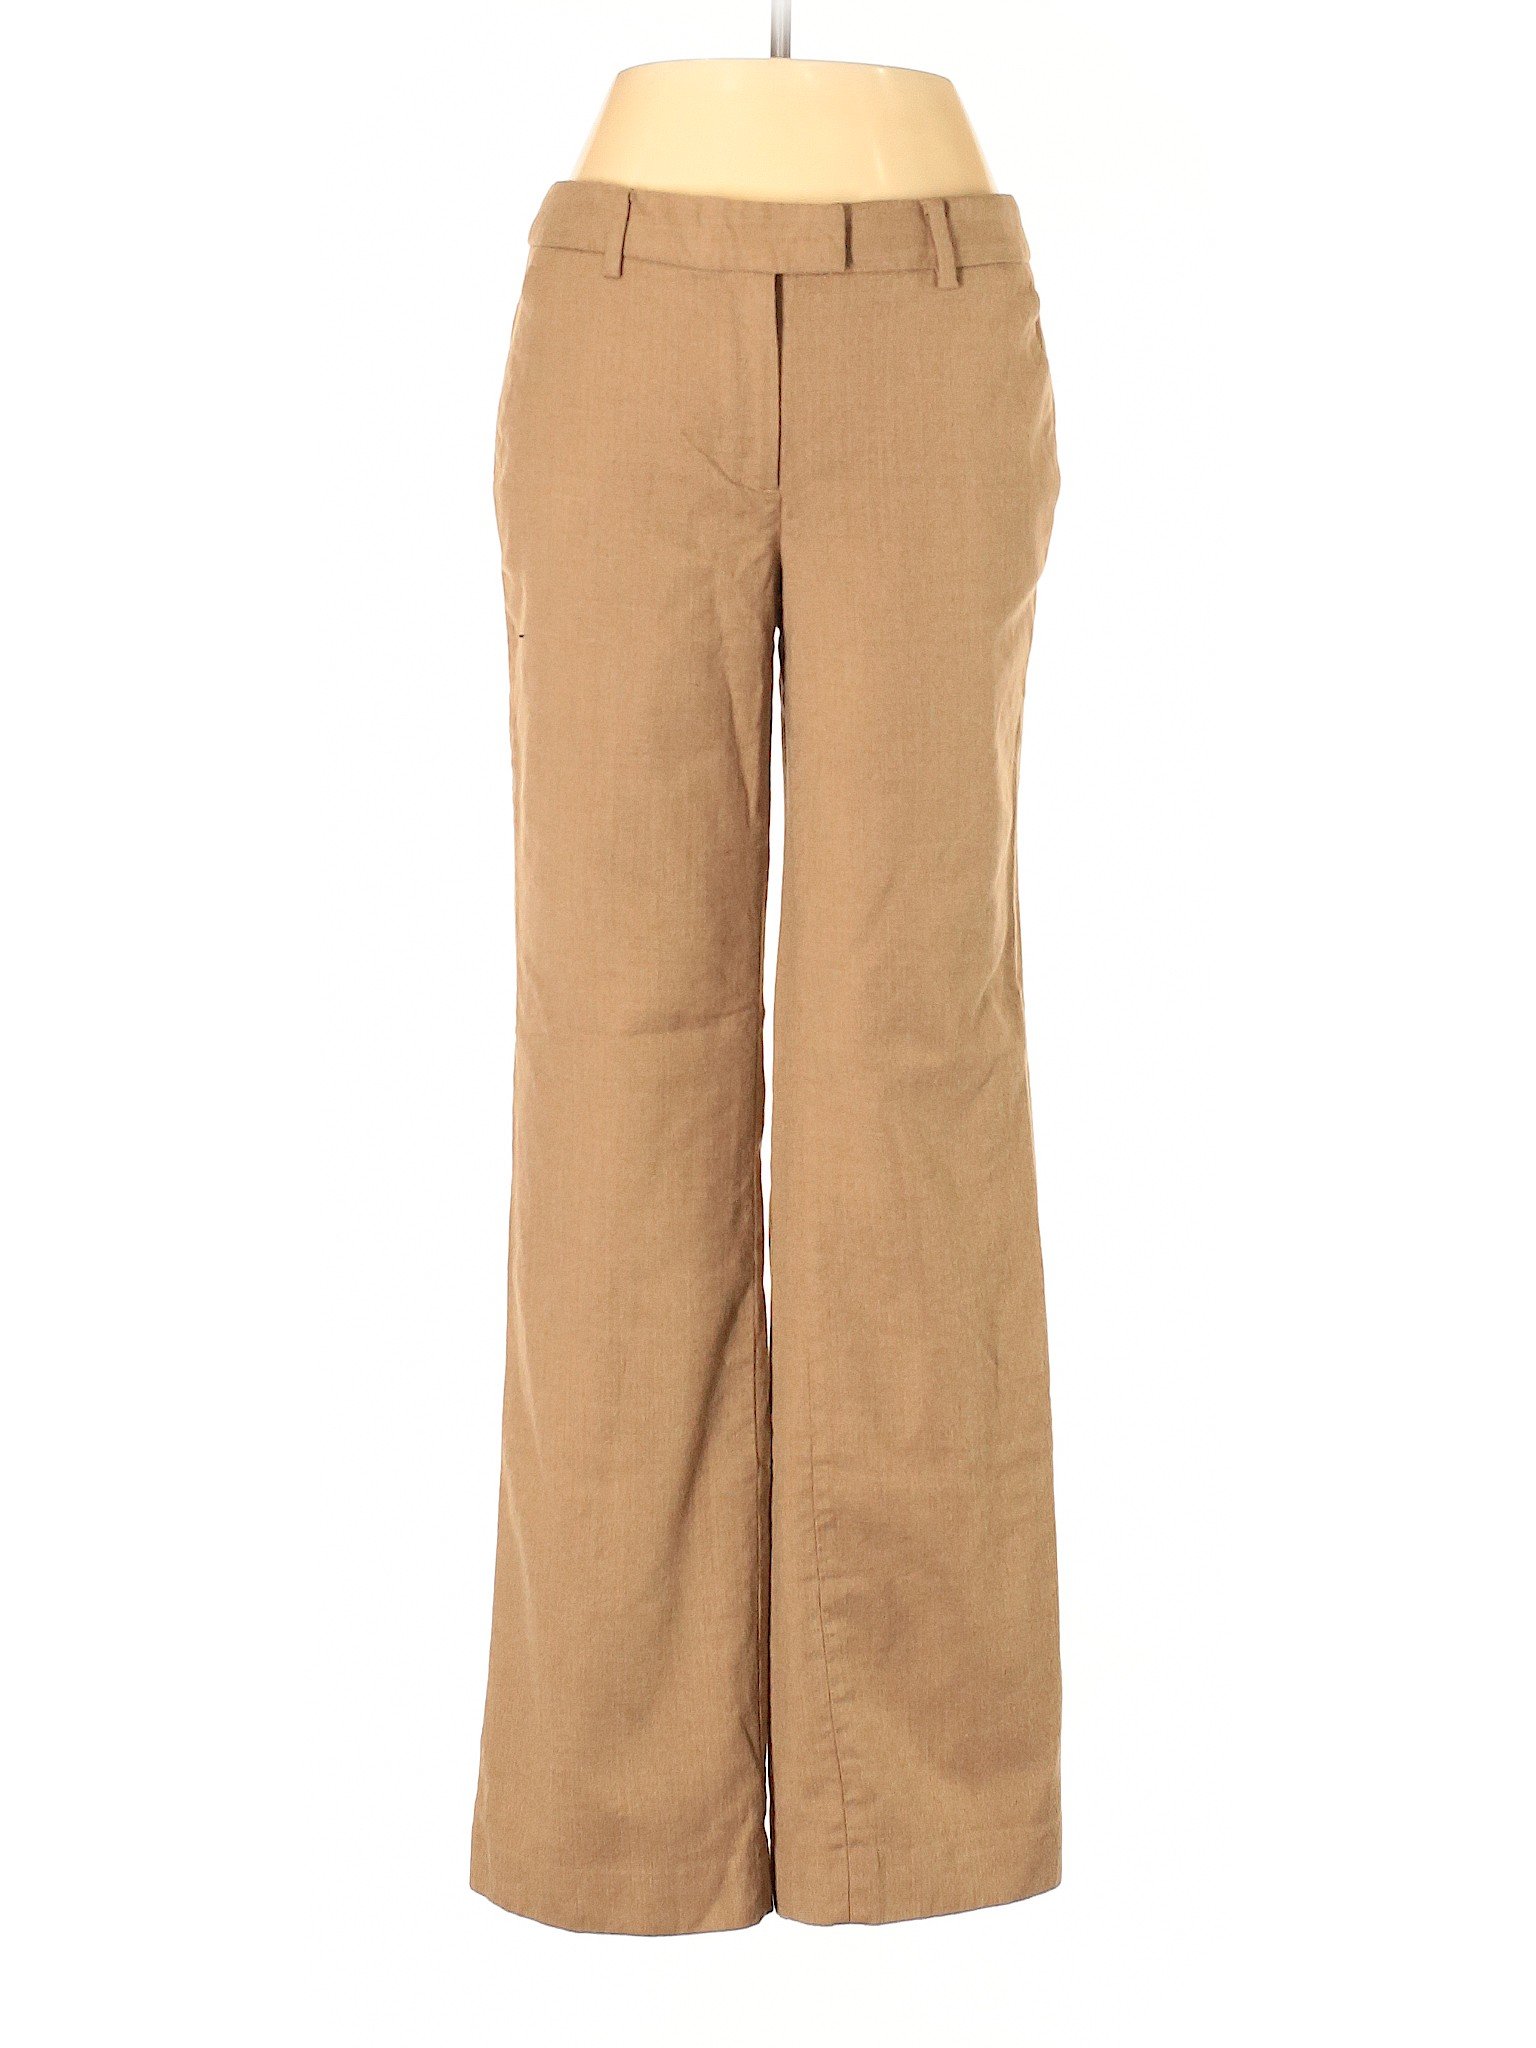 Talbots Women Brown Wool Pants 2 | eBay